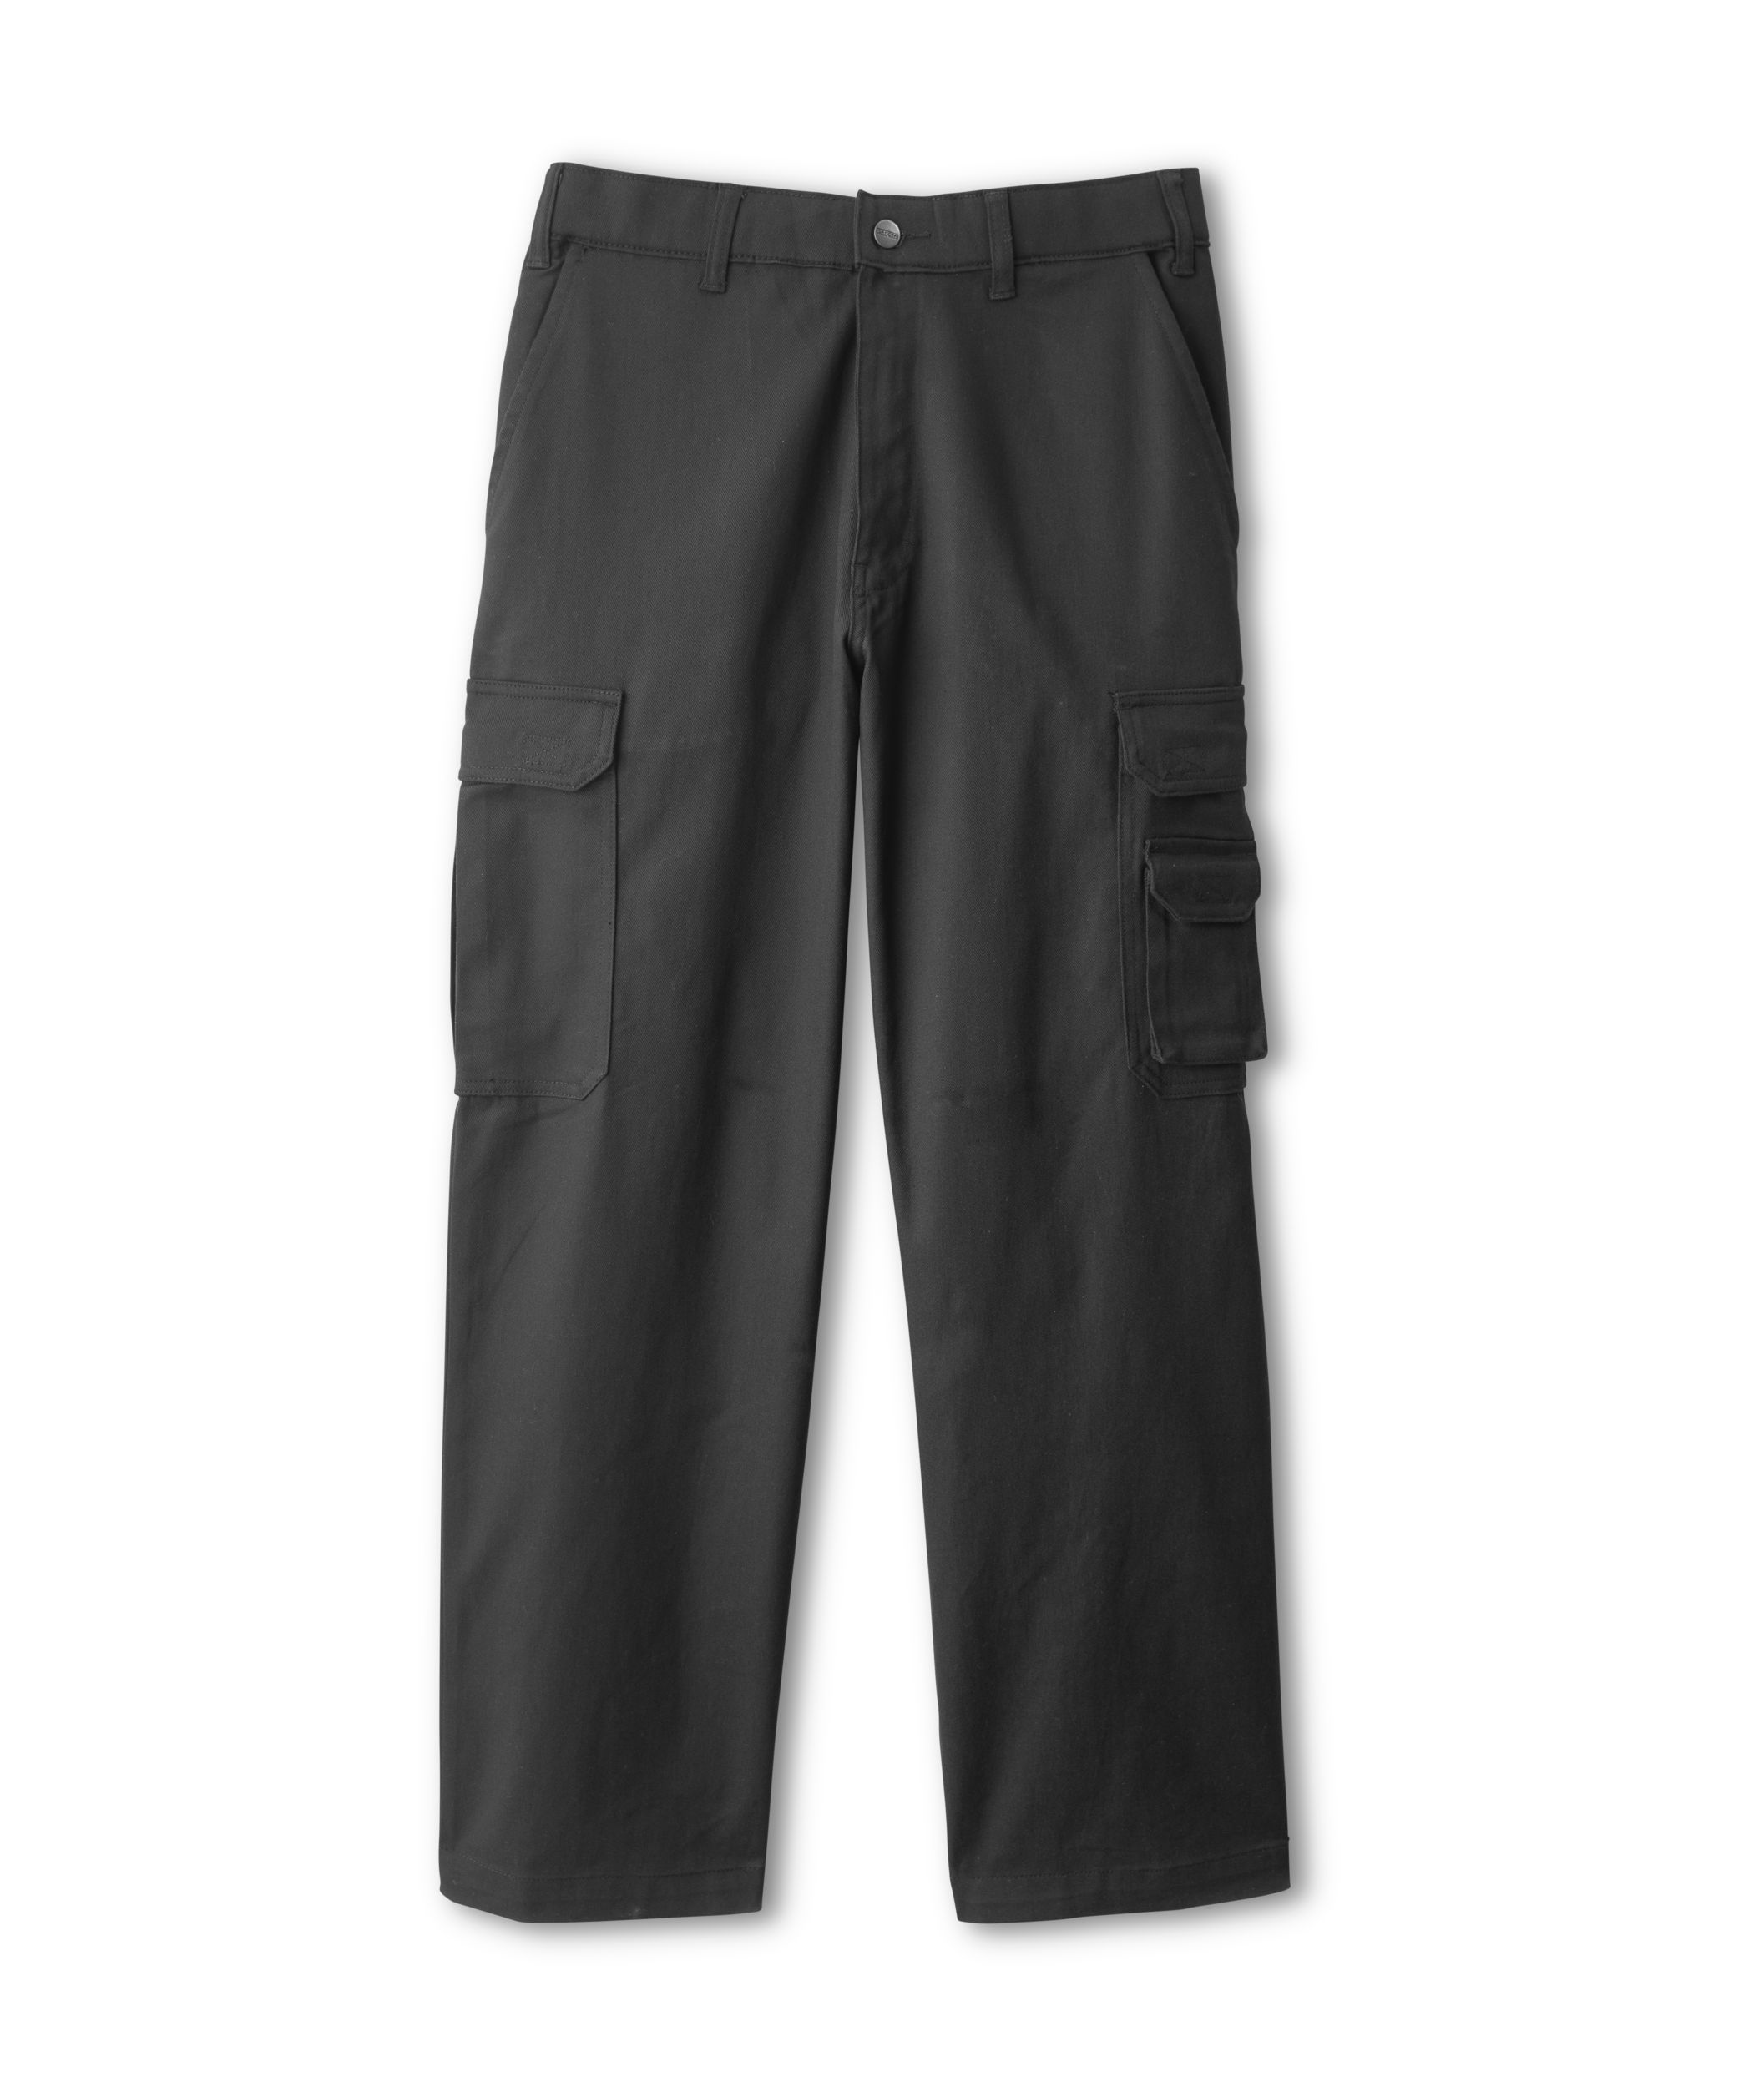 Dakota Cargo Work Pants 30x30 - Black 